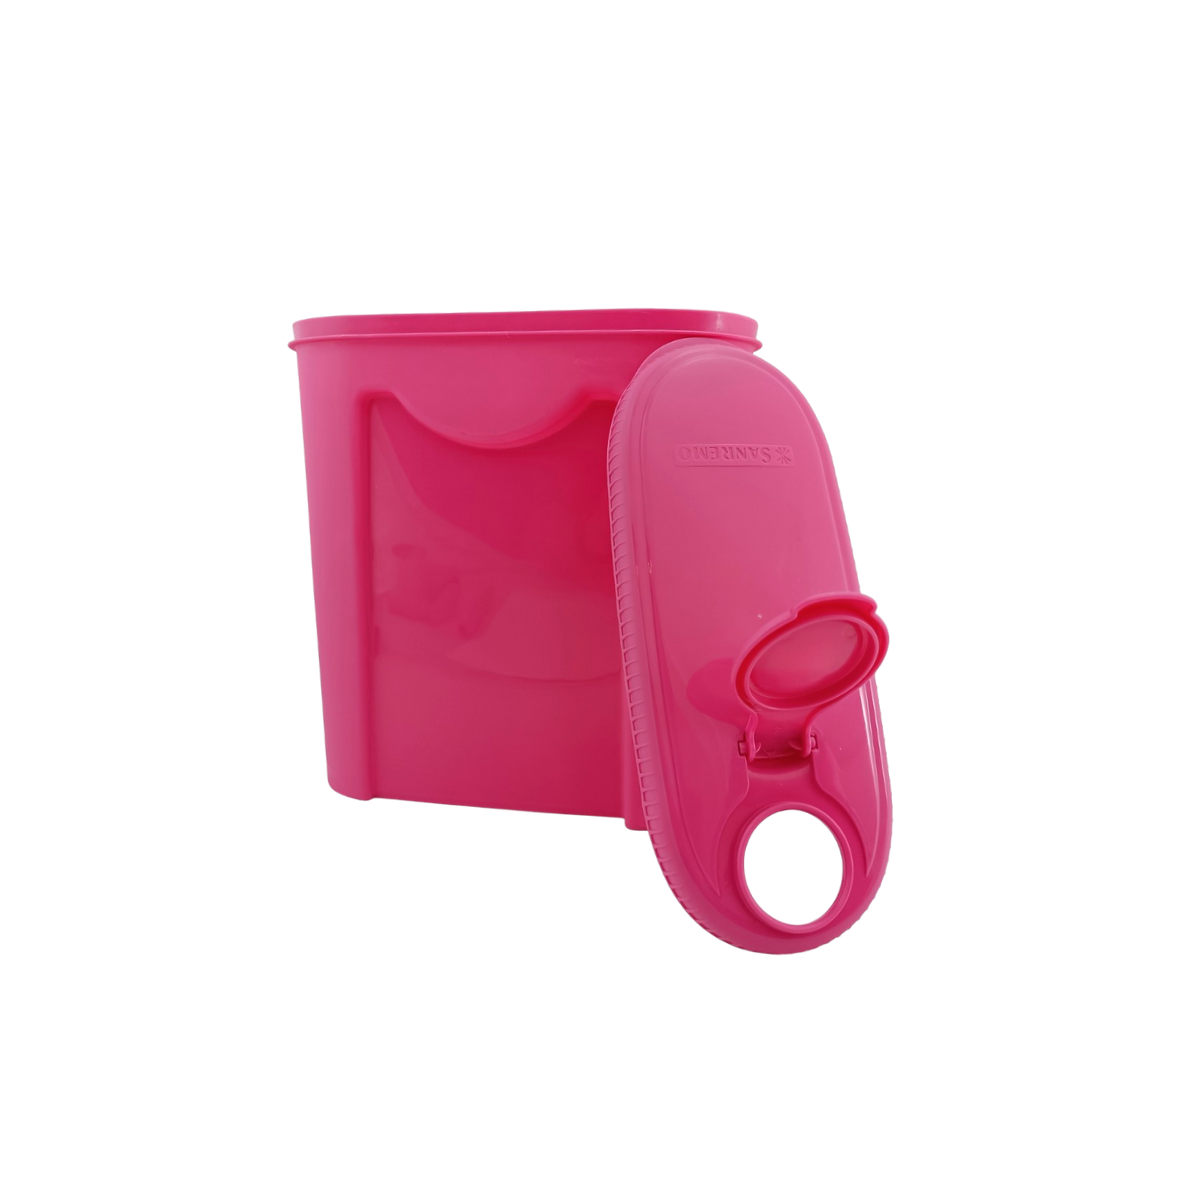 Porta croquetas para mascotas, color rosa, hecho de plástico, con tapa despachadora, San Remo